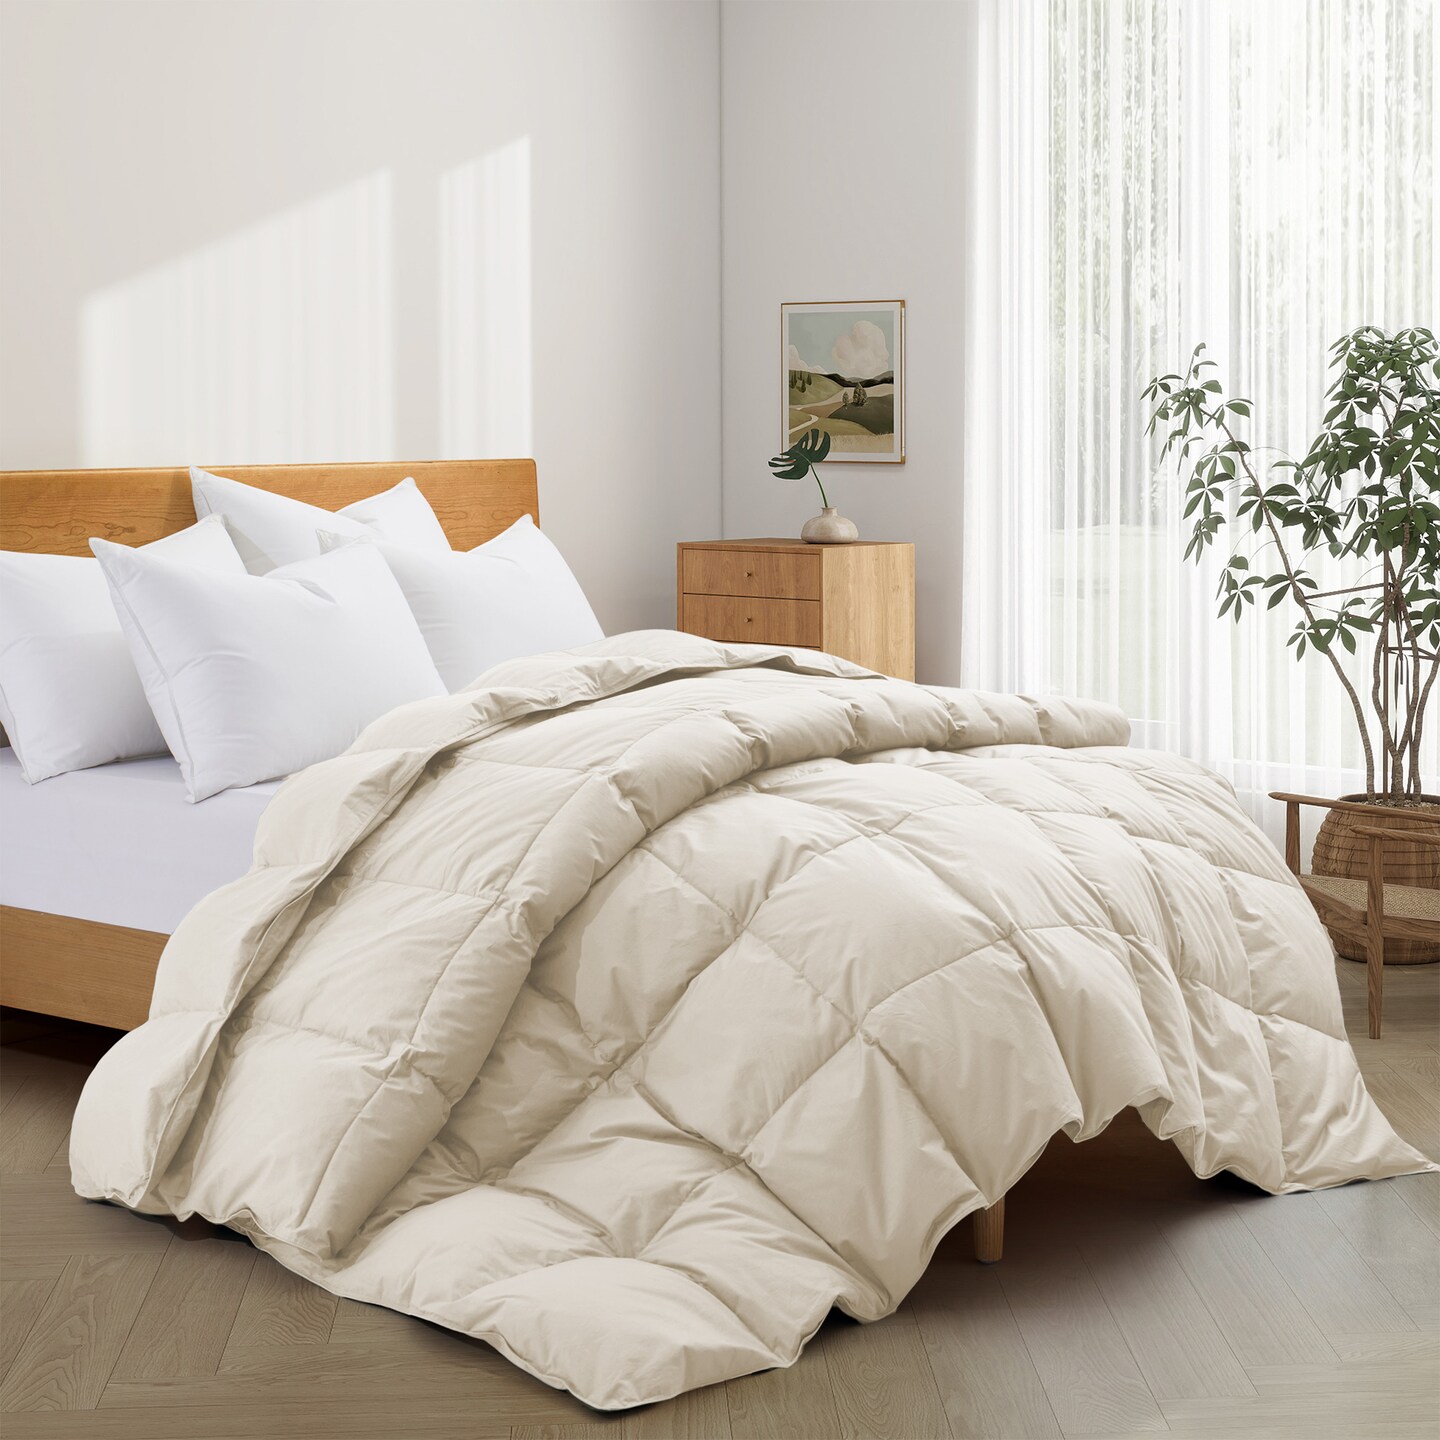 Peace Nest Luxury Hotel Comforter Organic Cotton All Season Fluffy Goose Down Feather Machine Washable Comforter